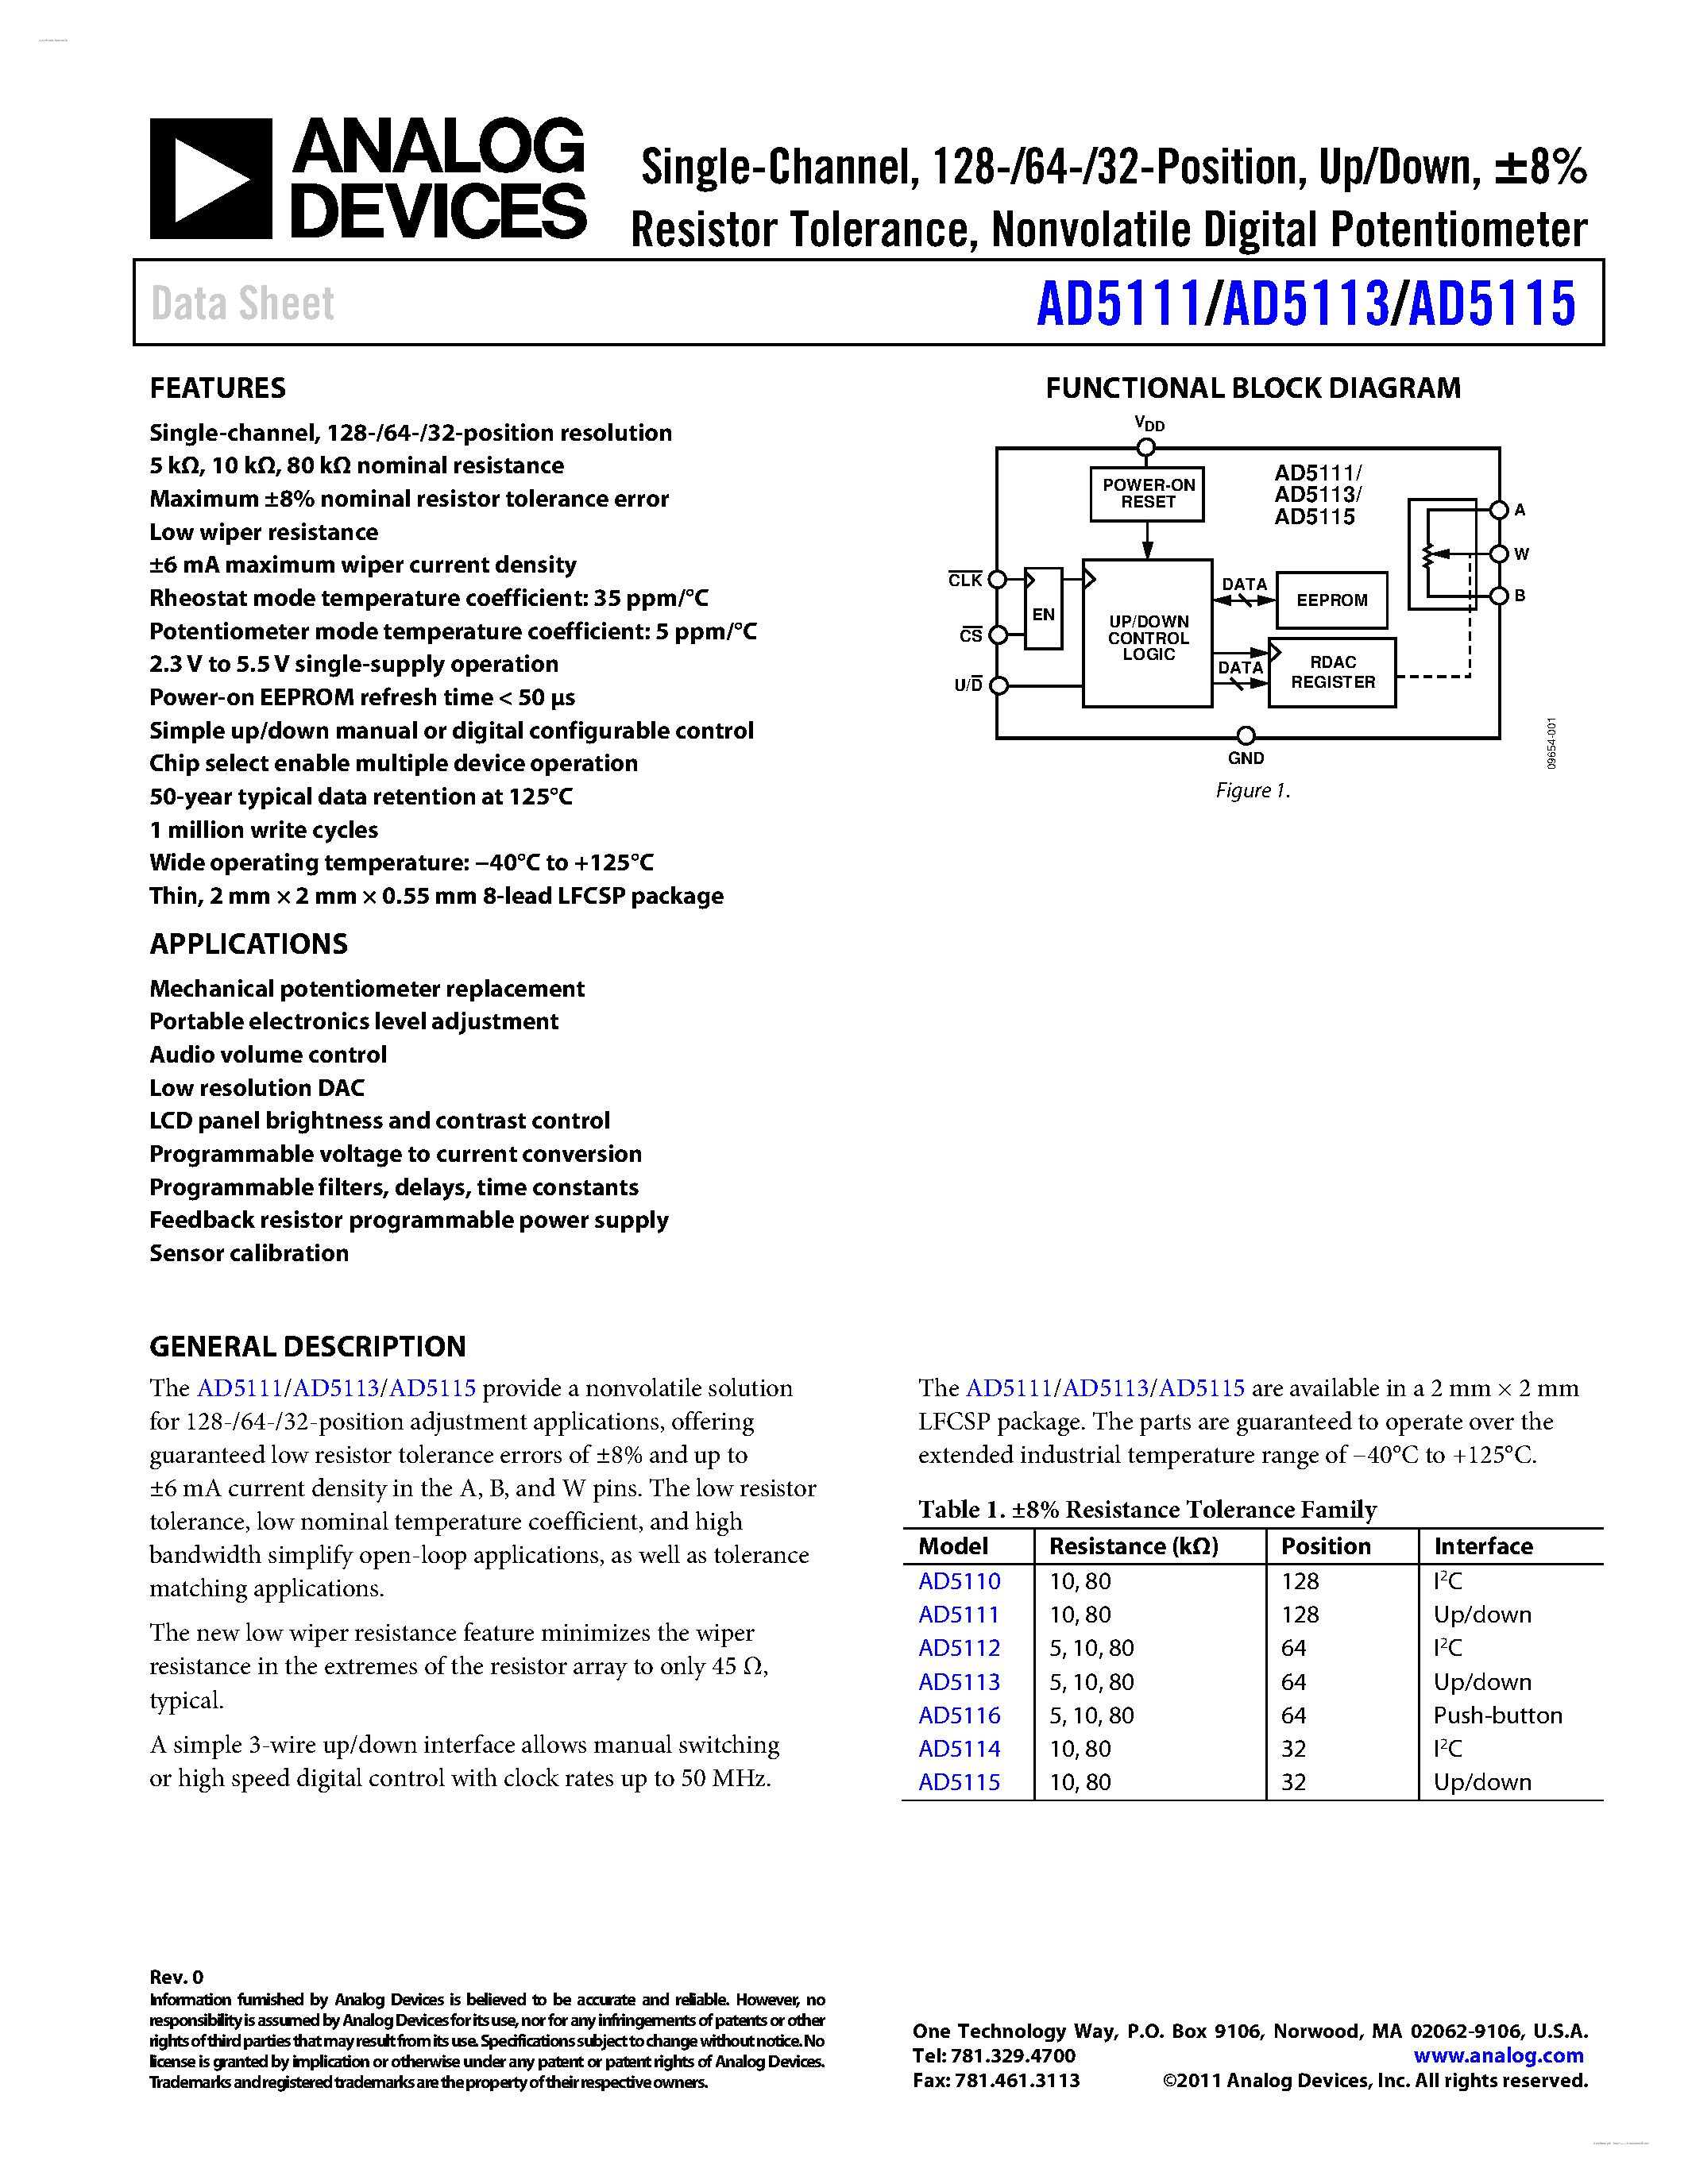 Даташит AD5111 - (AD5111 - AD5115) Nonvolatile Digital Potentiometer страница 1